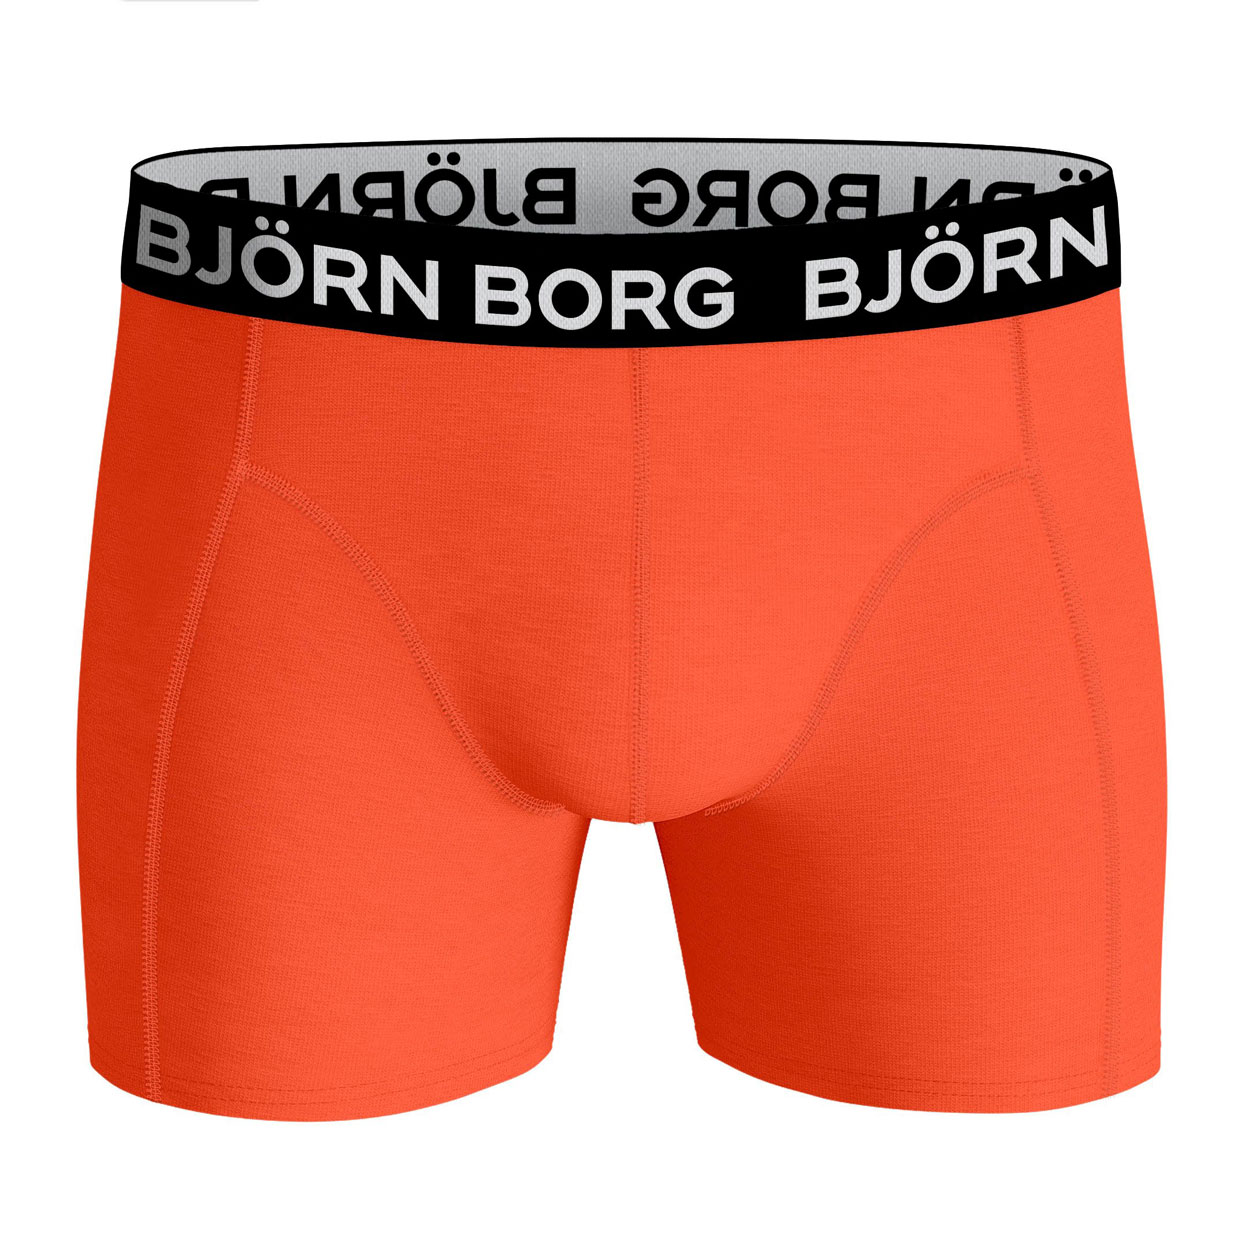 10001719-mp006-Bjorn-Borg-oranje